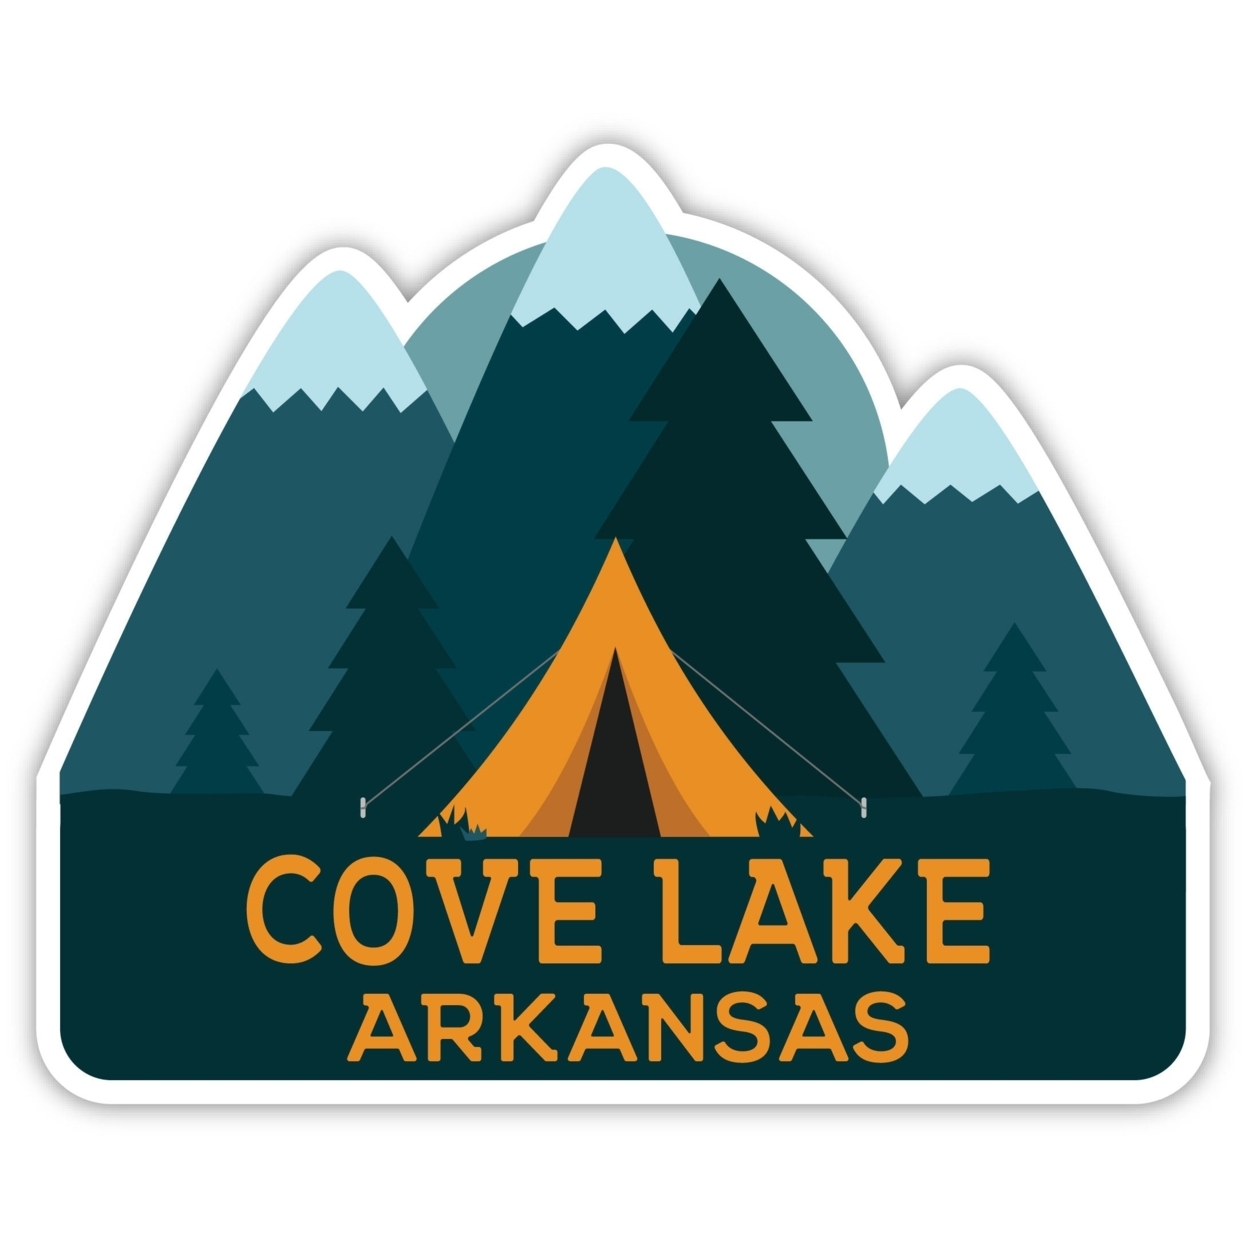 Cove Lake Arkansas Souvenir Decorative Stickers (Choose Theme And Size) - 4-Pack, 12-Inch, Tent